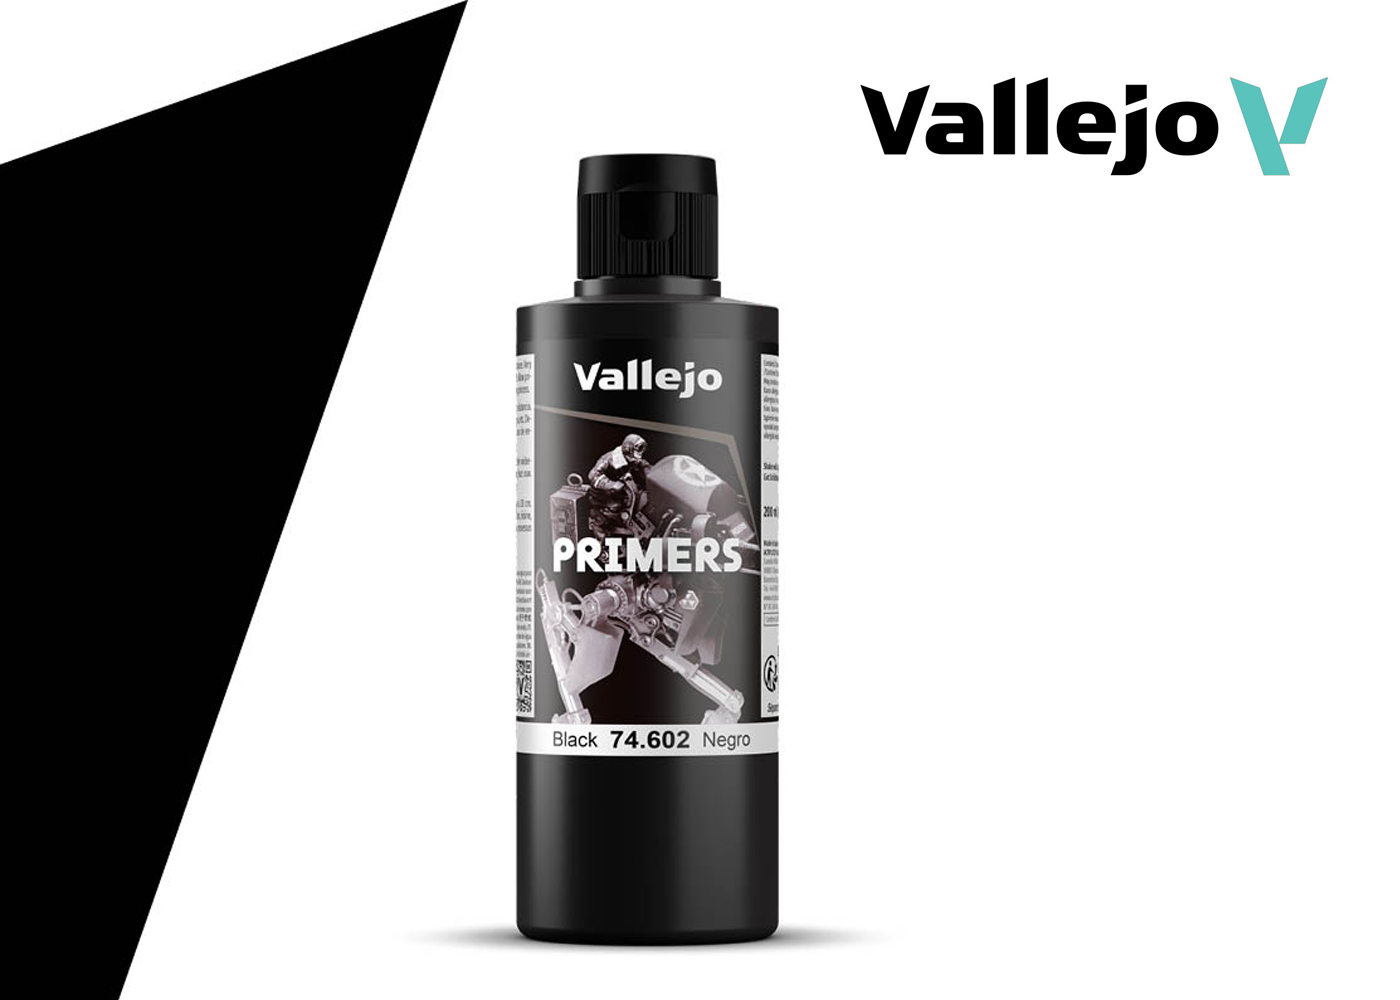 Gloss Black Surface Primer (200 ml / 6.76 fl oz), Acrylicos Vallejo